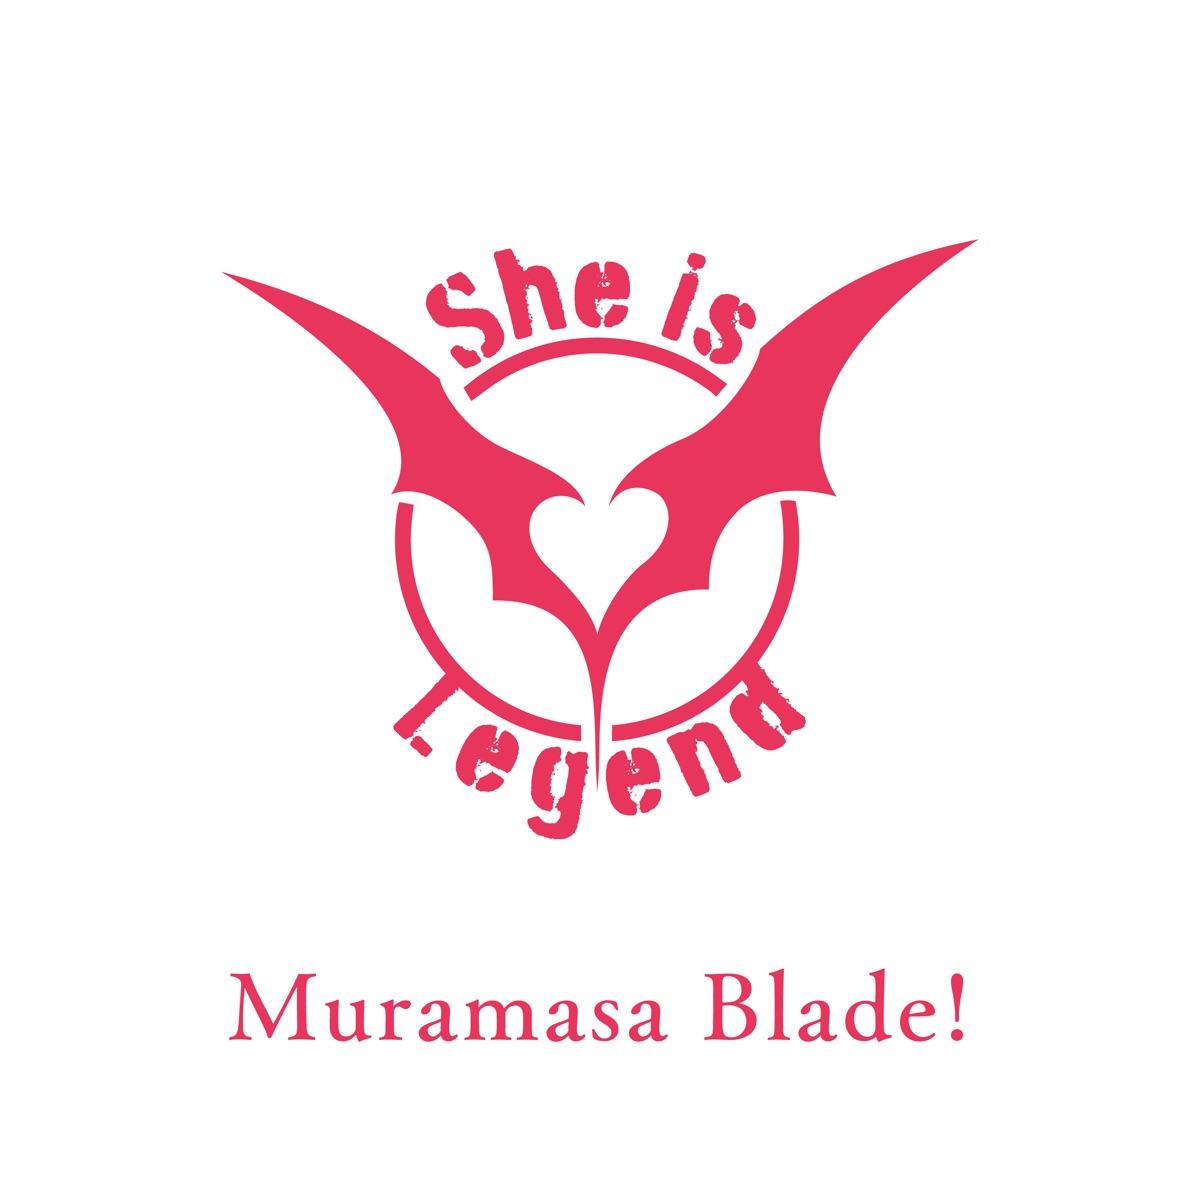 『She is Legend - 終末のヒーロー』収録の『Muramasa Blade!』ジャケット